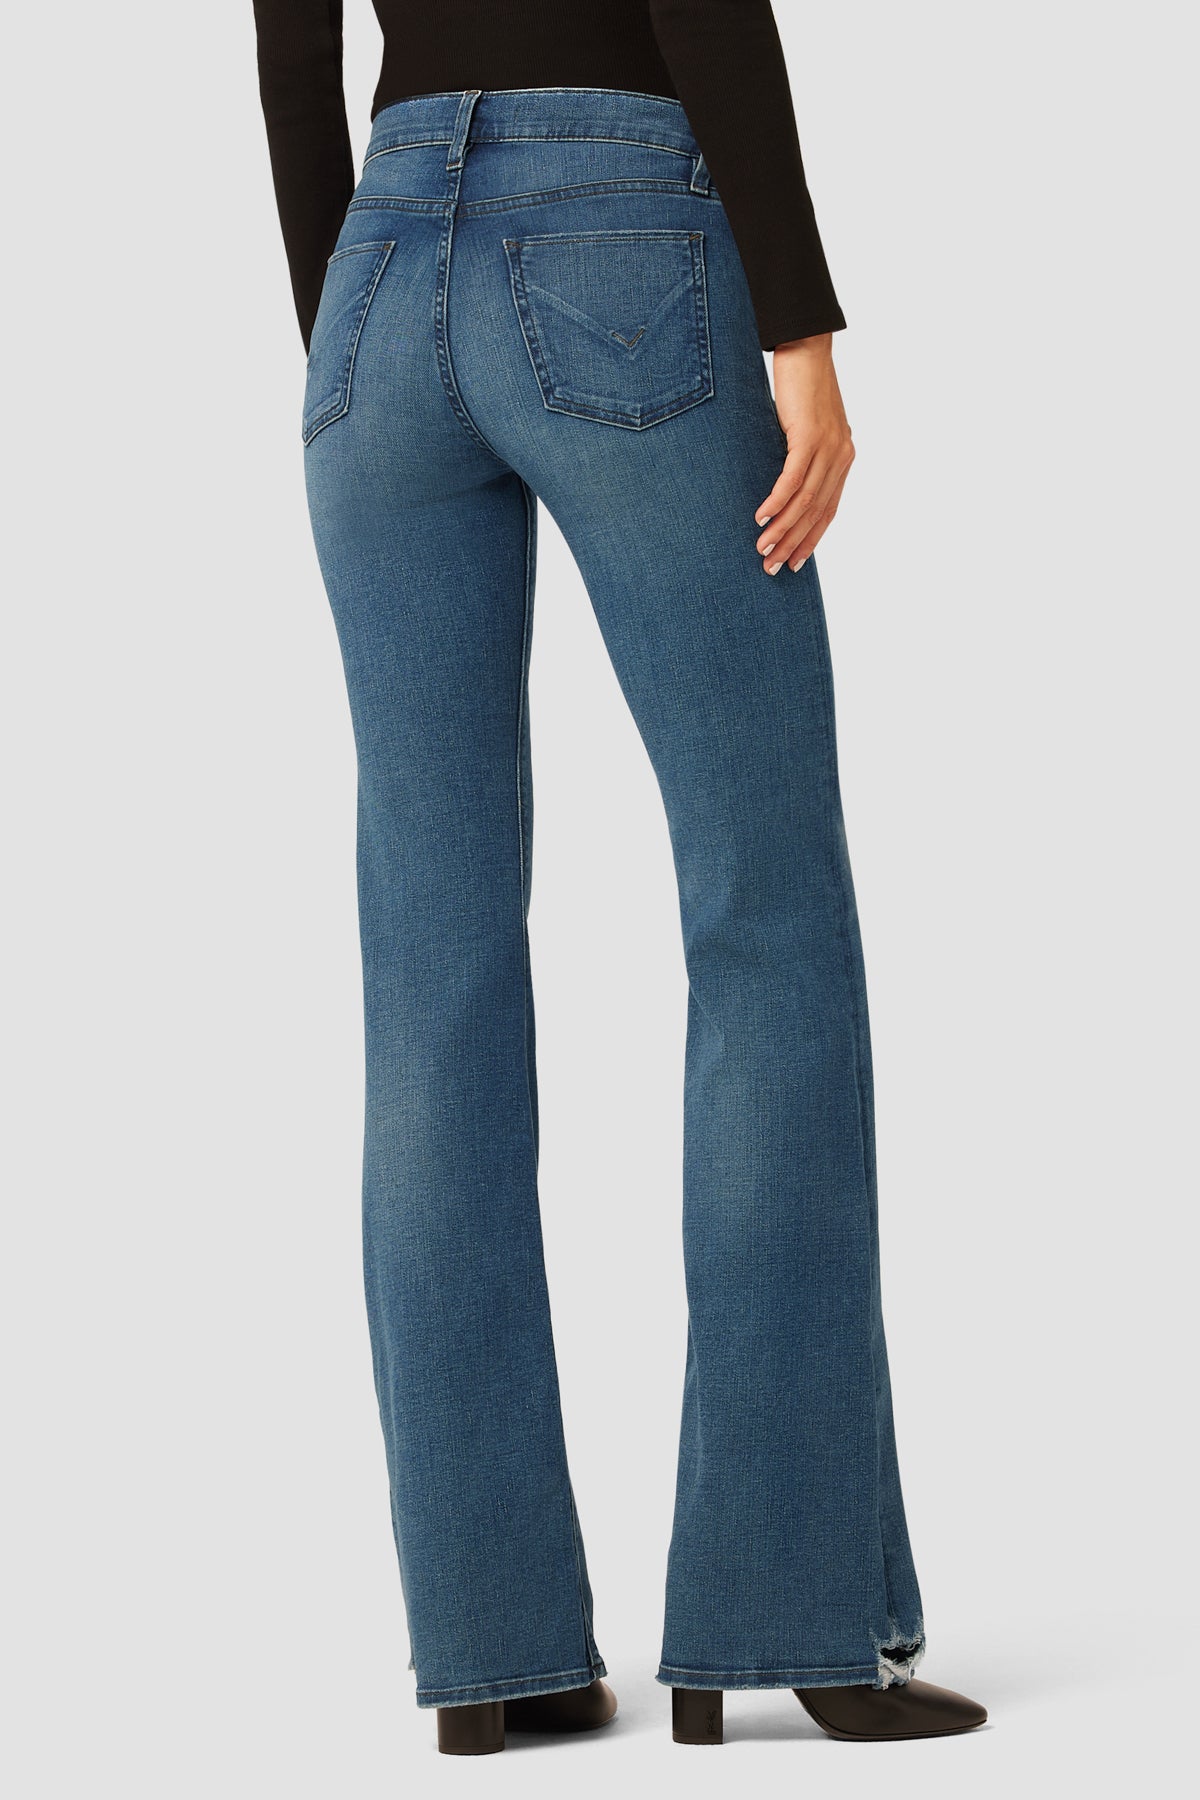 Italian Nico | Bootcut Maternity Premium Hudson Jean Jeans Fabric |